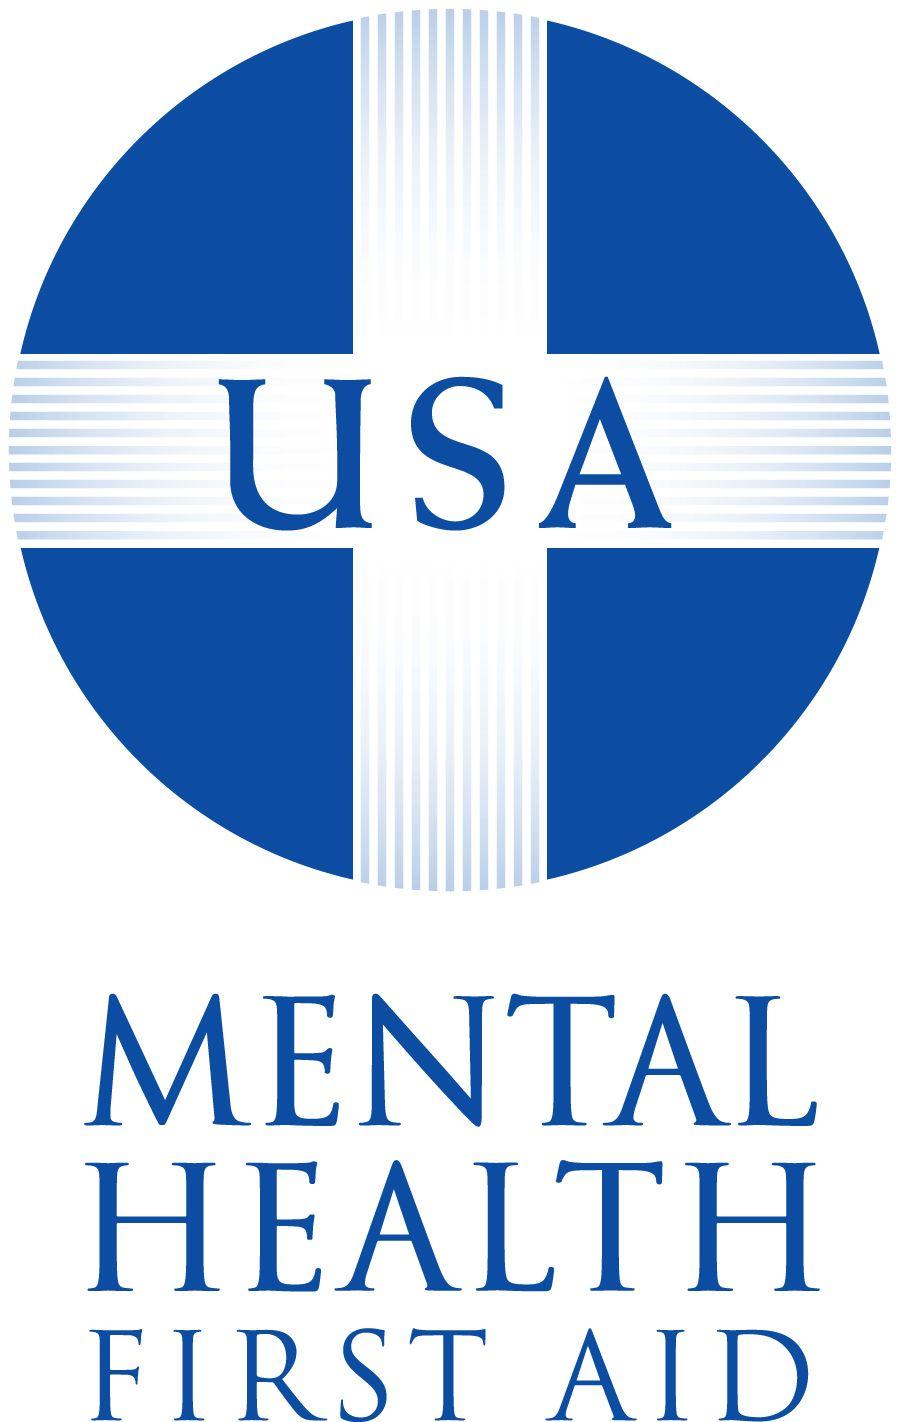 First Aid CPR Logo - Mental Health First Aid & QPR Training. Mental Health America